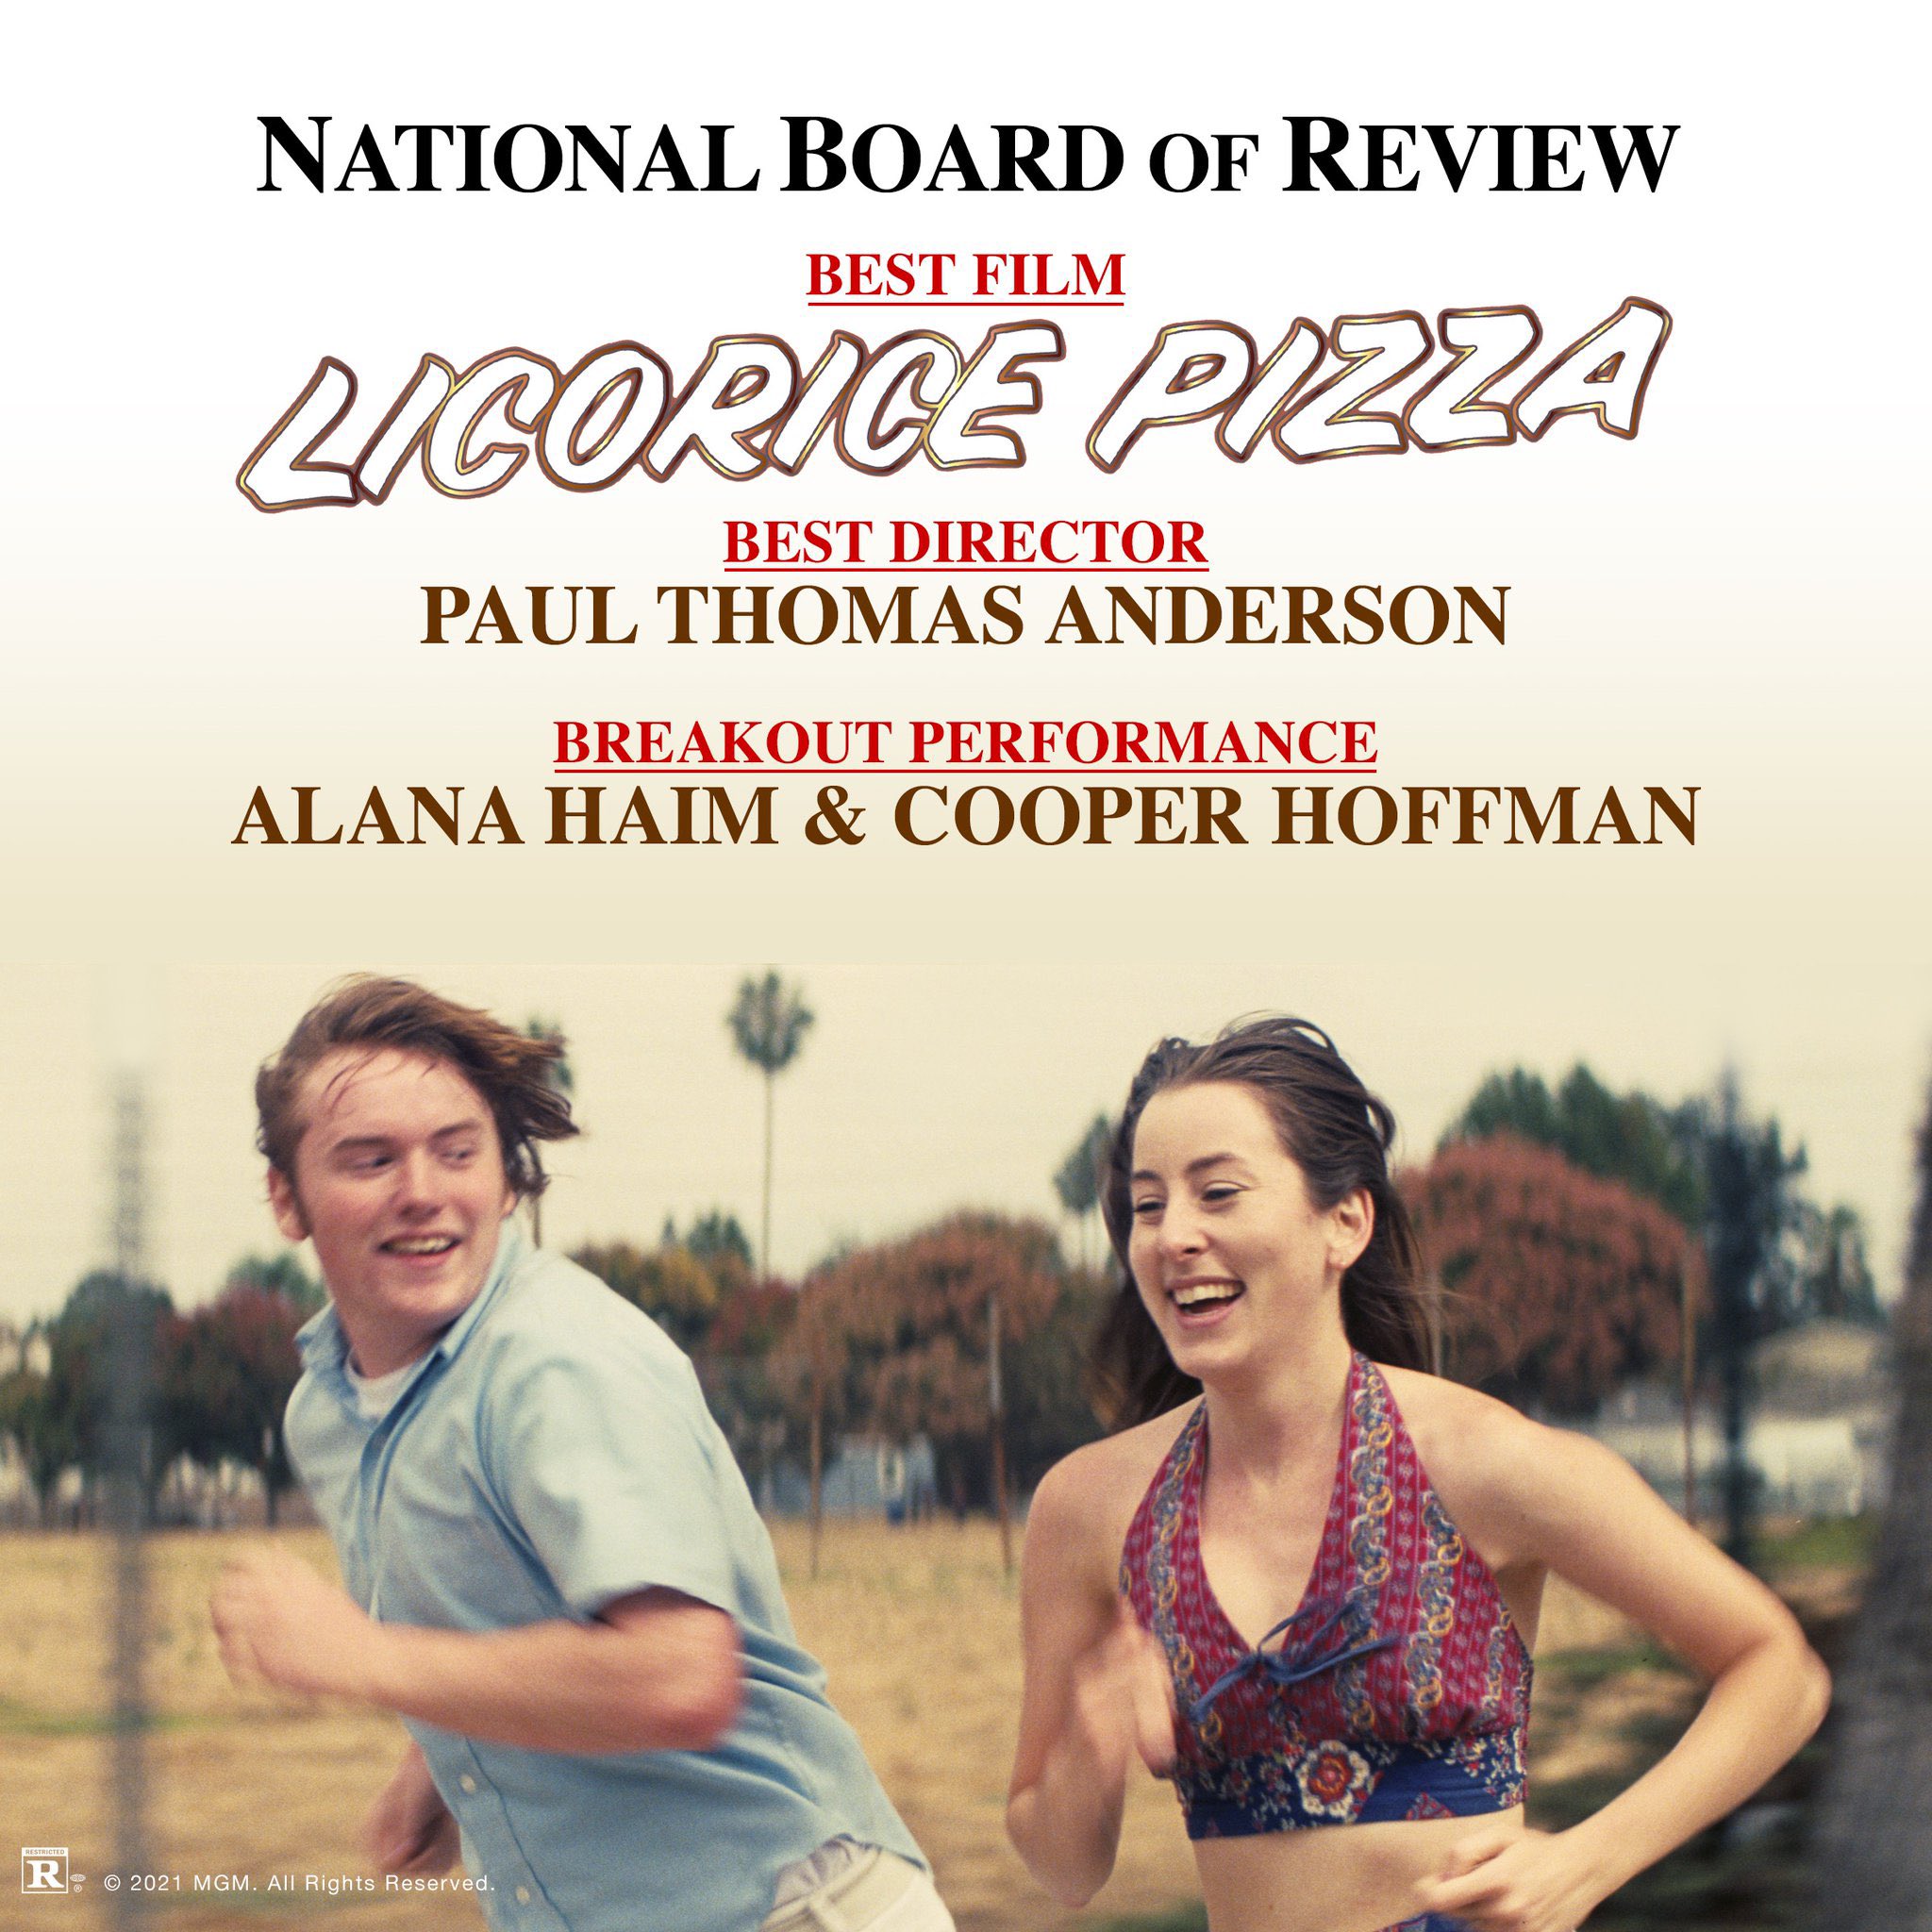 Film Updates on X: Paul Thomas Anderson's 'LICORICE PIZZA